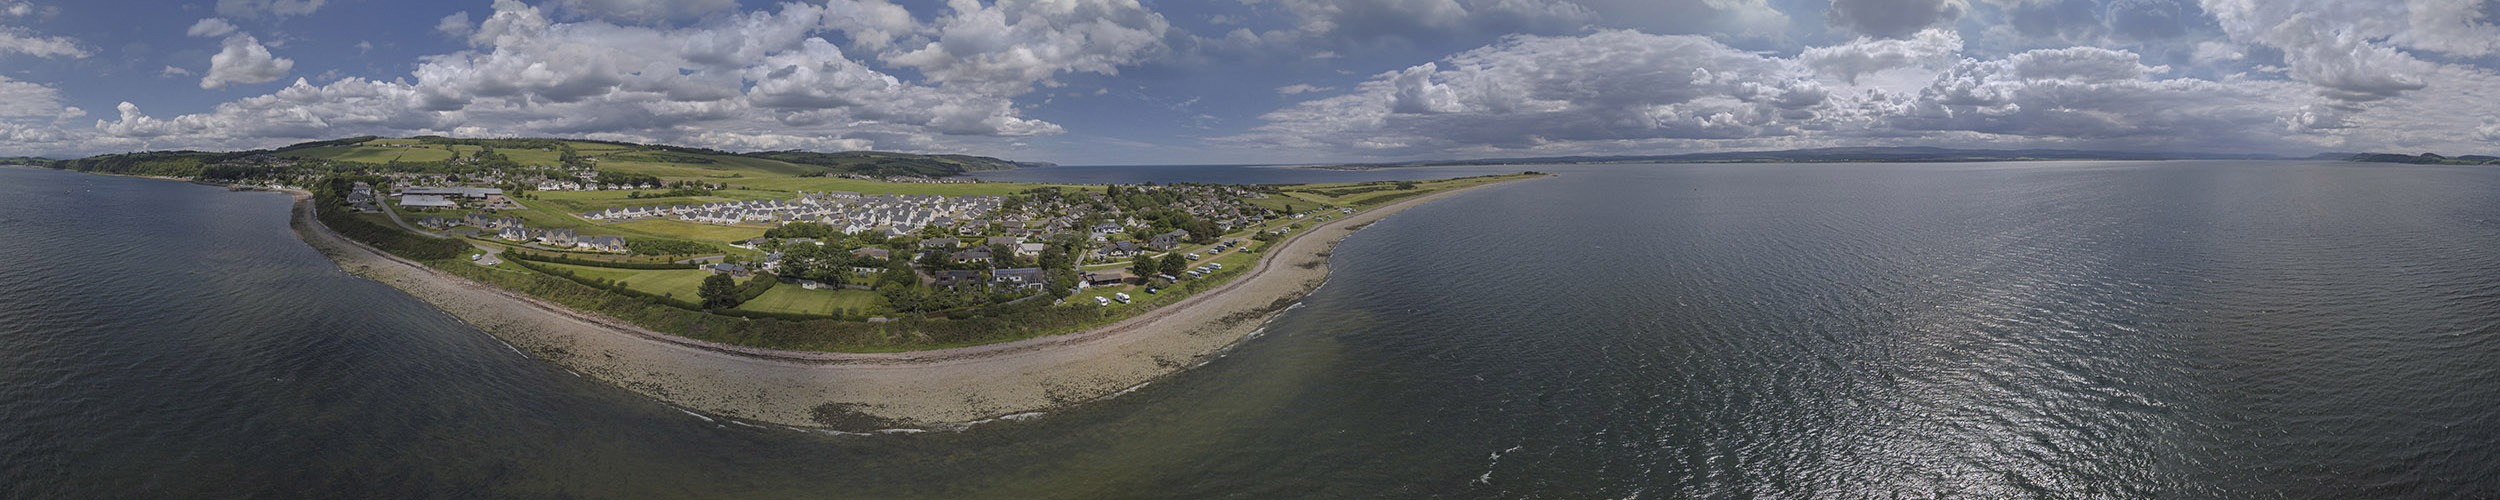 aerial photography, Cromarty Firth, Cromarty Bridge, Black Isle, Ben Wyvis